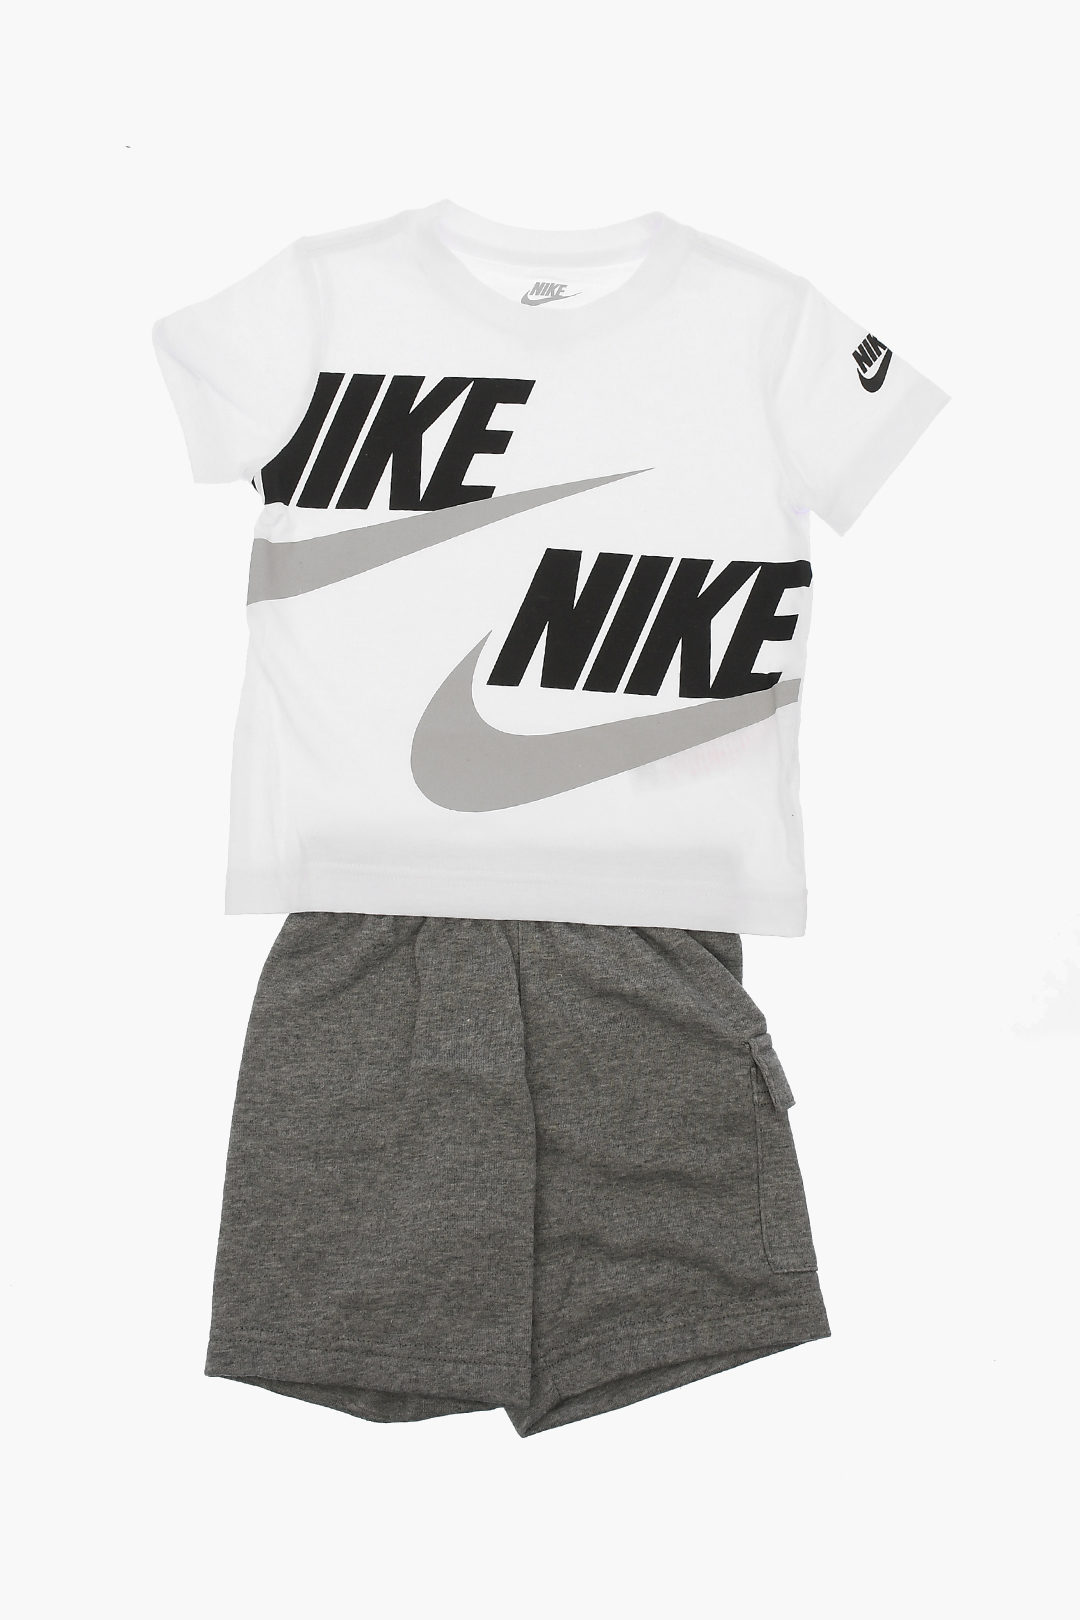 Nike KIDS t-shirt and Shorts Set boys - Glamood Outlet